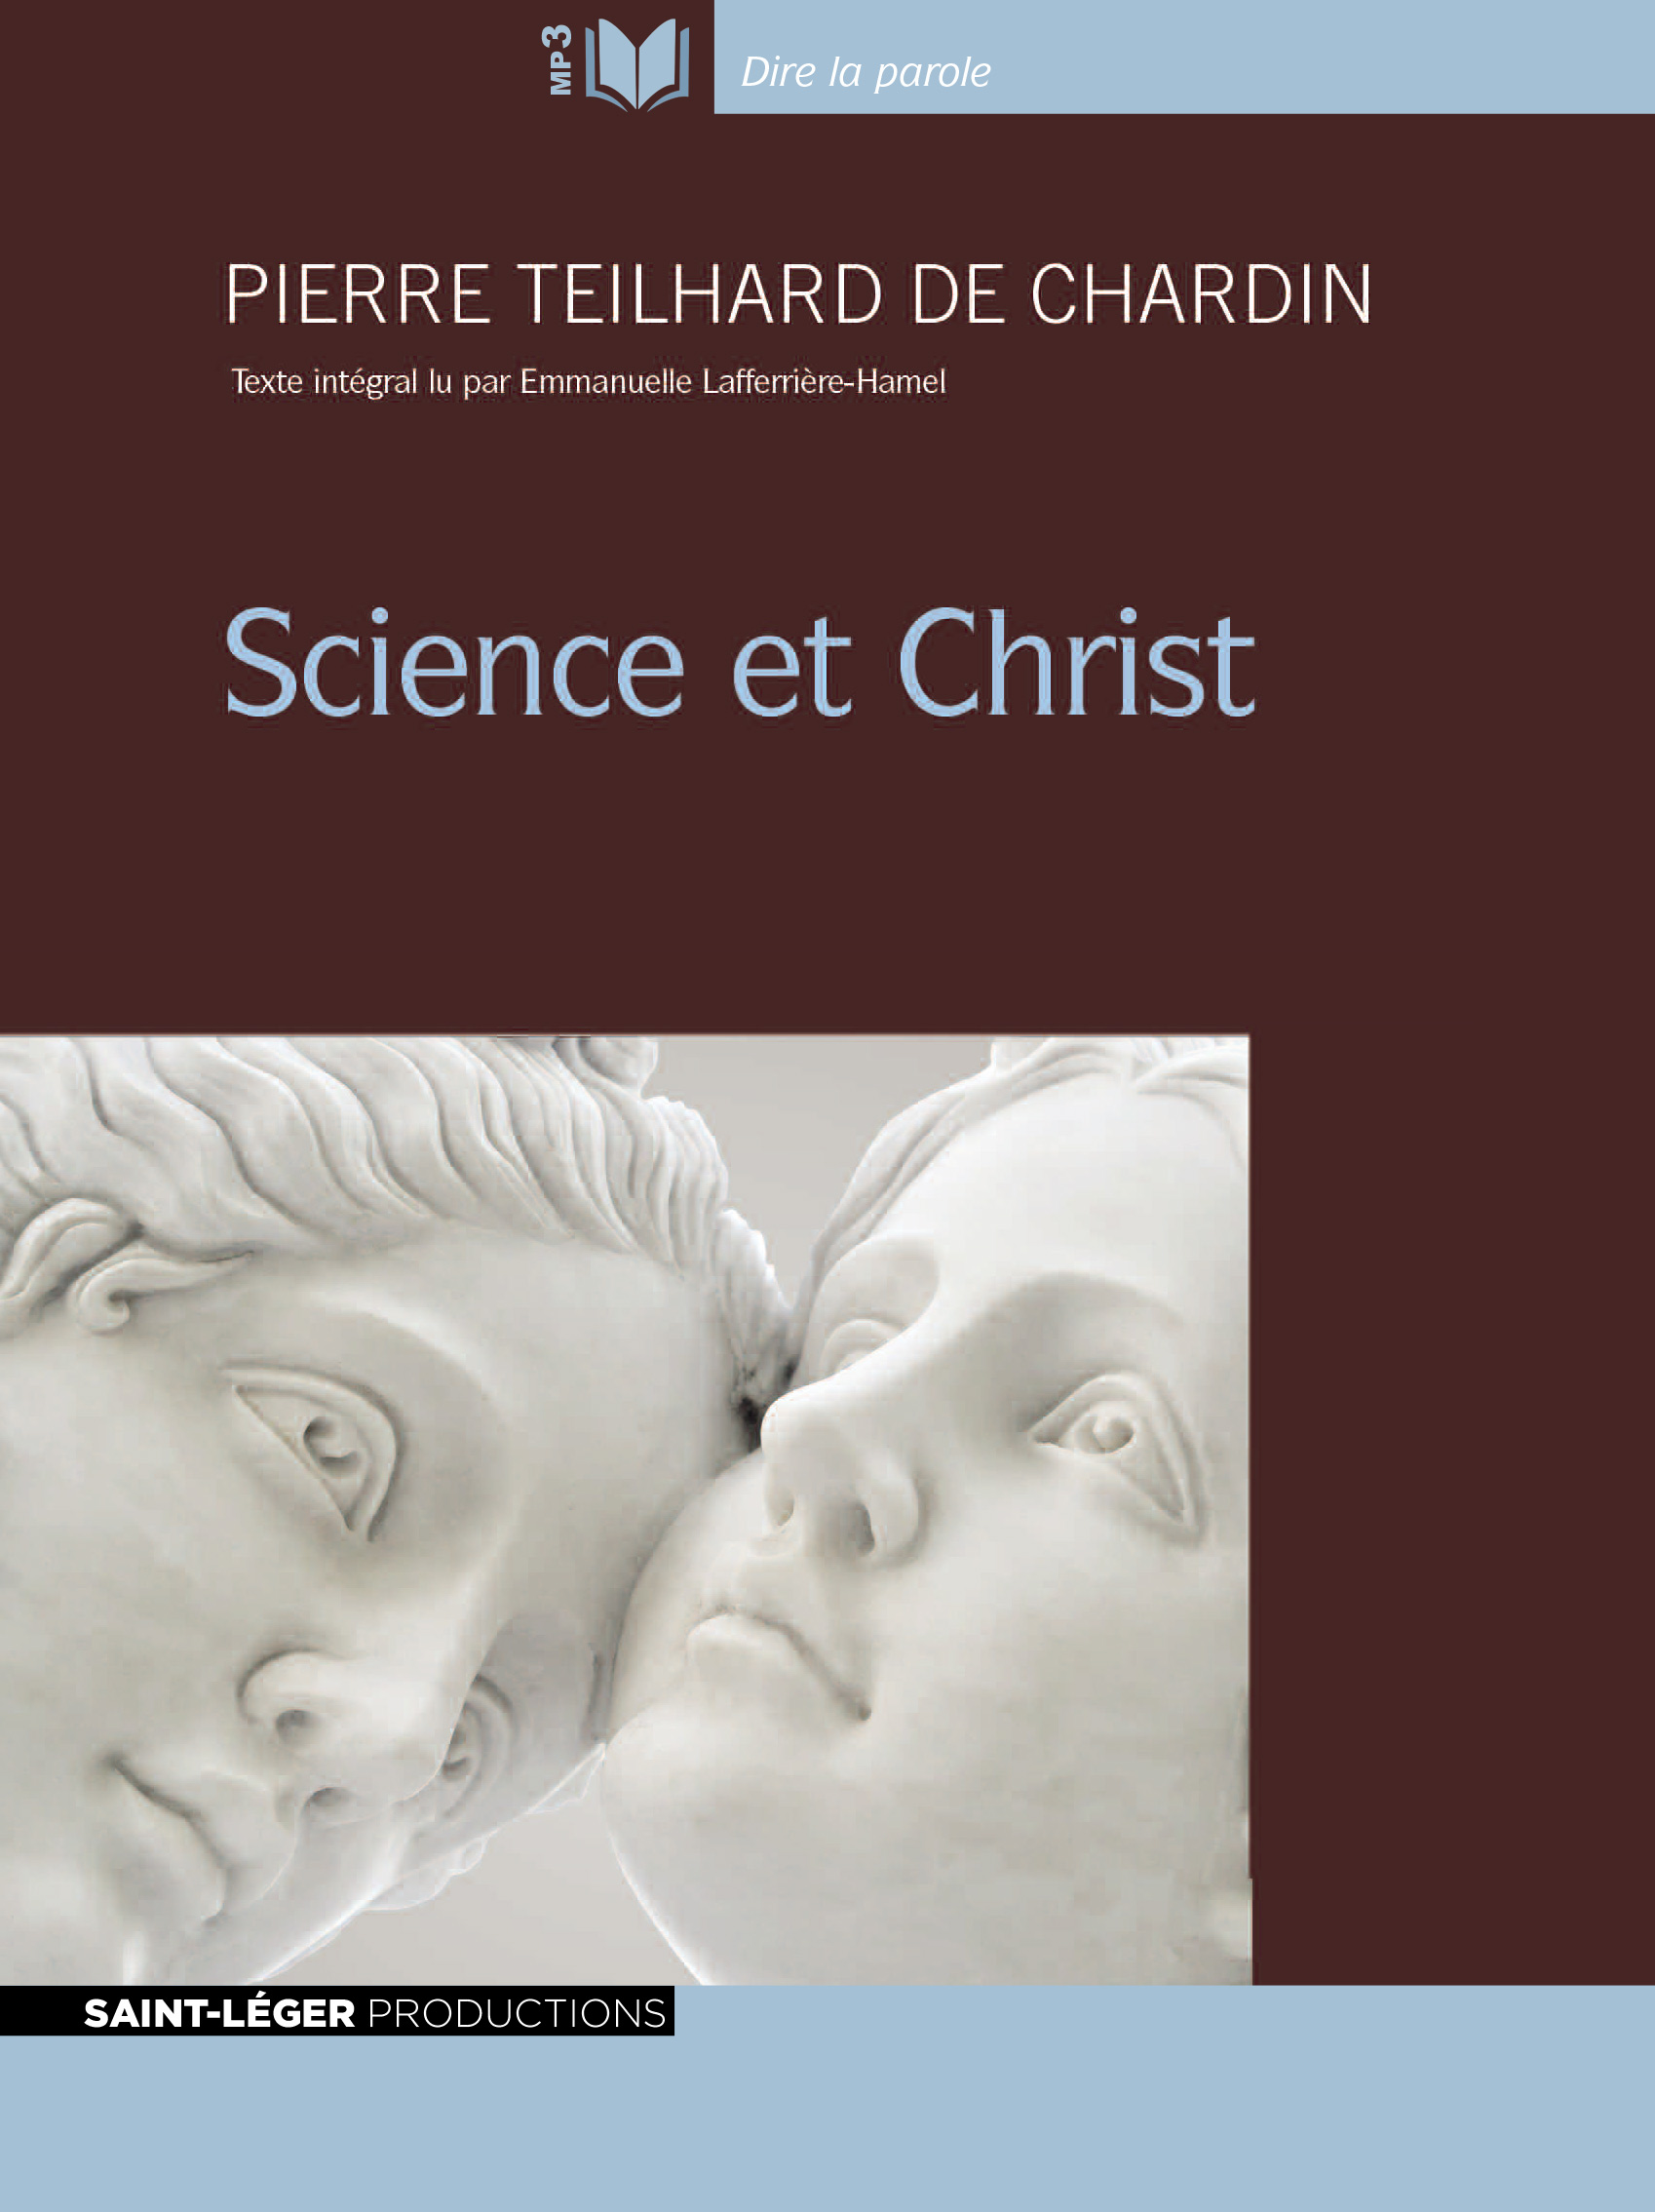 Teilhard de Chardin, science et Christ, audiolivre